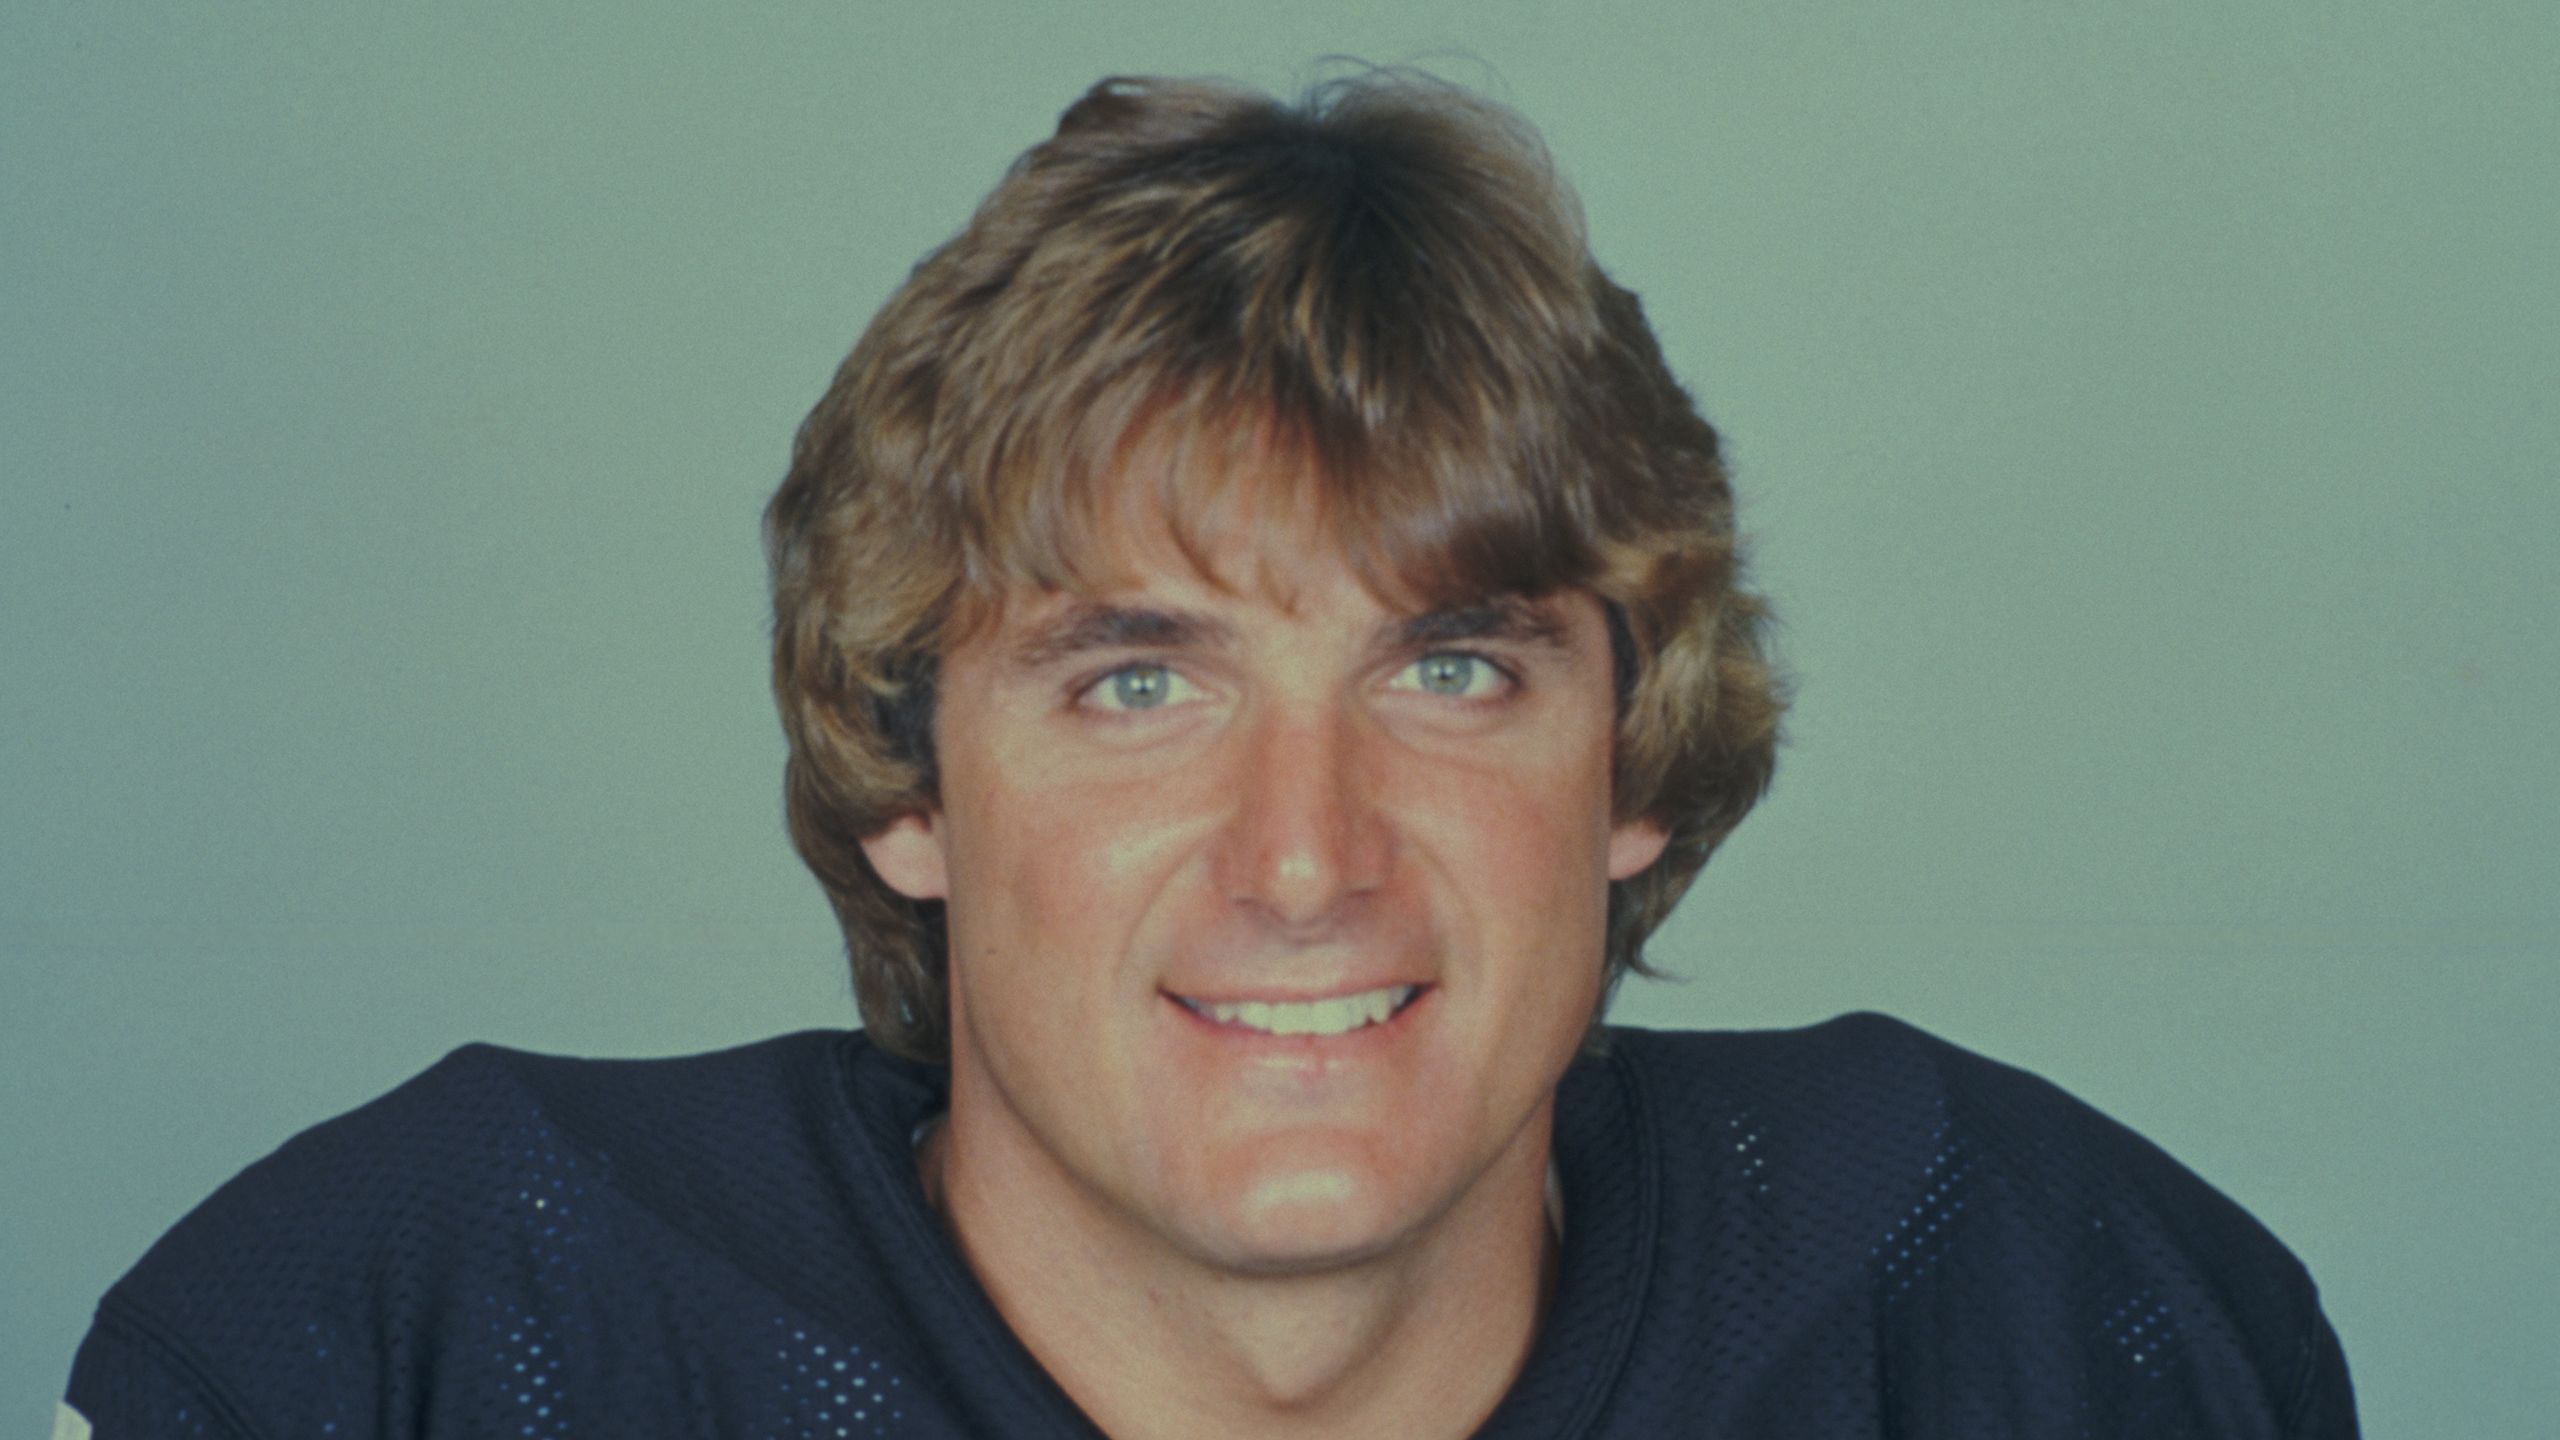 Dan Pastorini Houston Oilers 1972-1979 Oakland Raiders 1980-1981